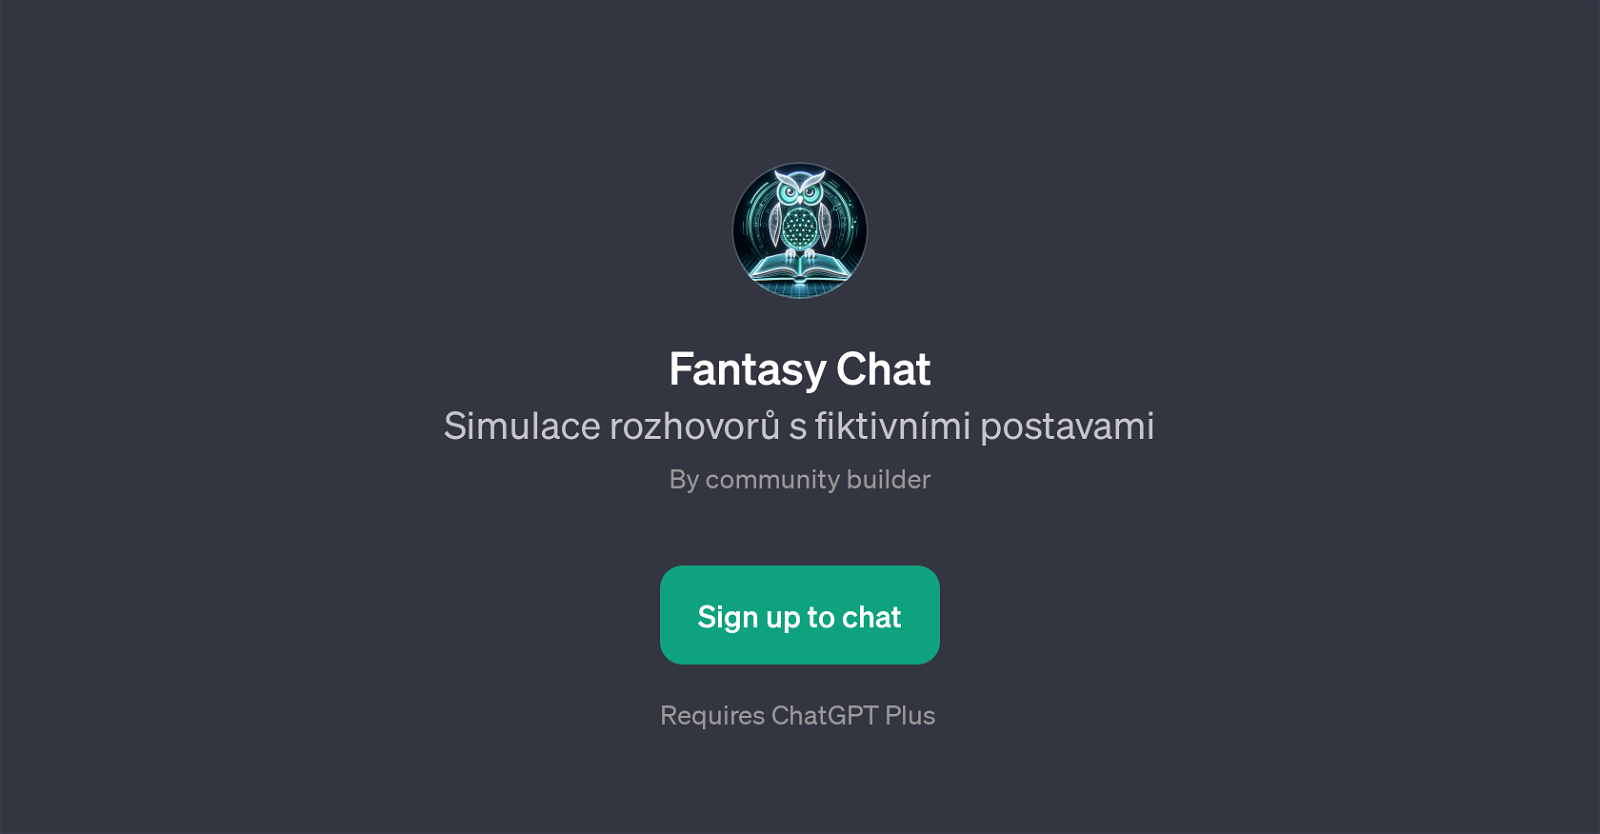 Fantasy Chat website